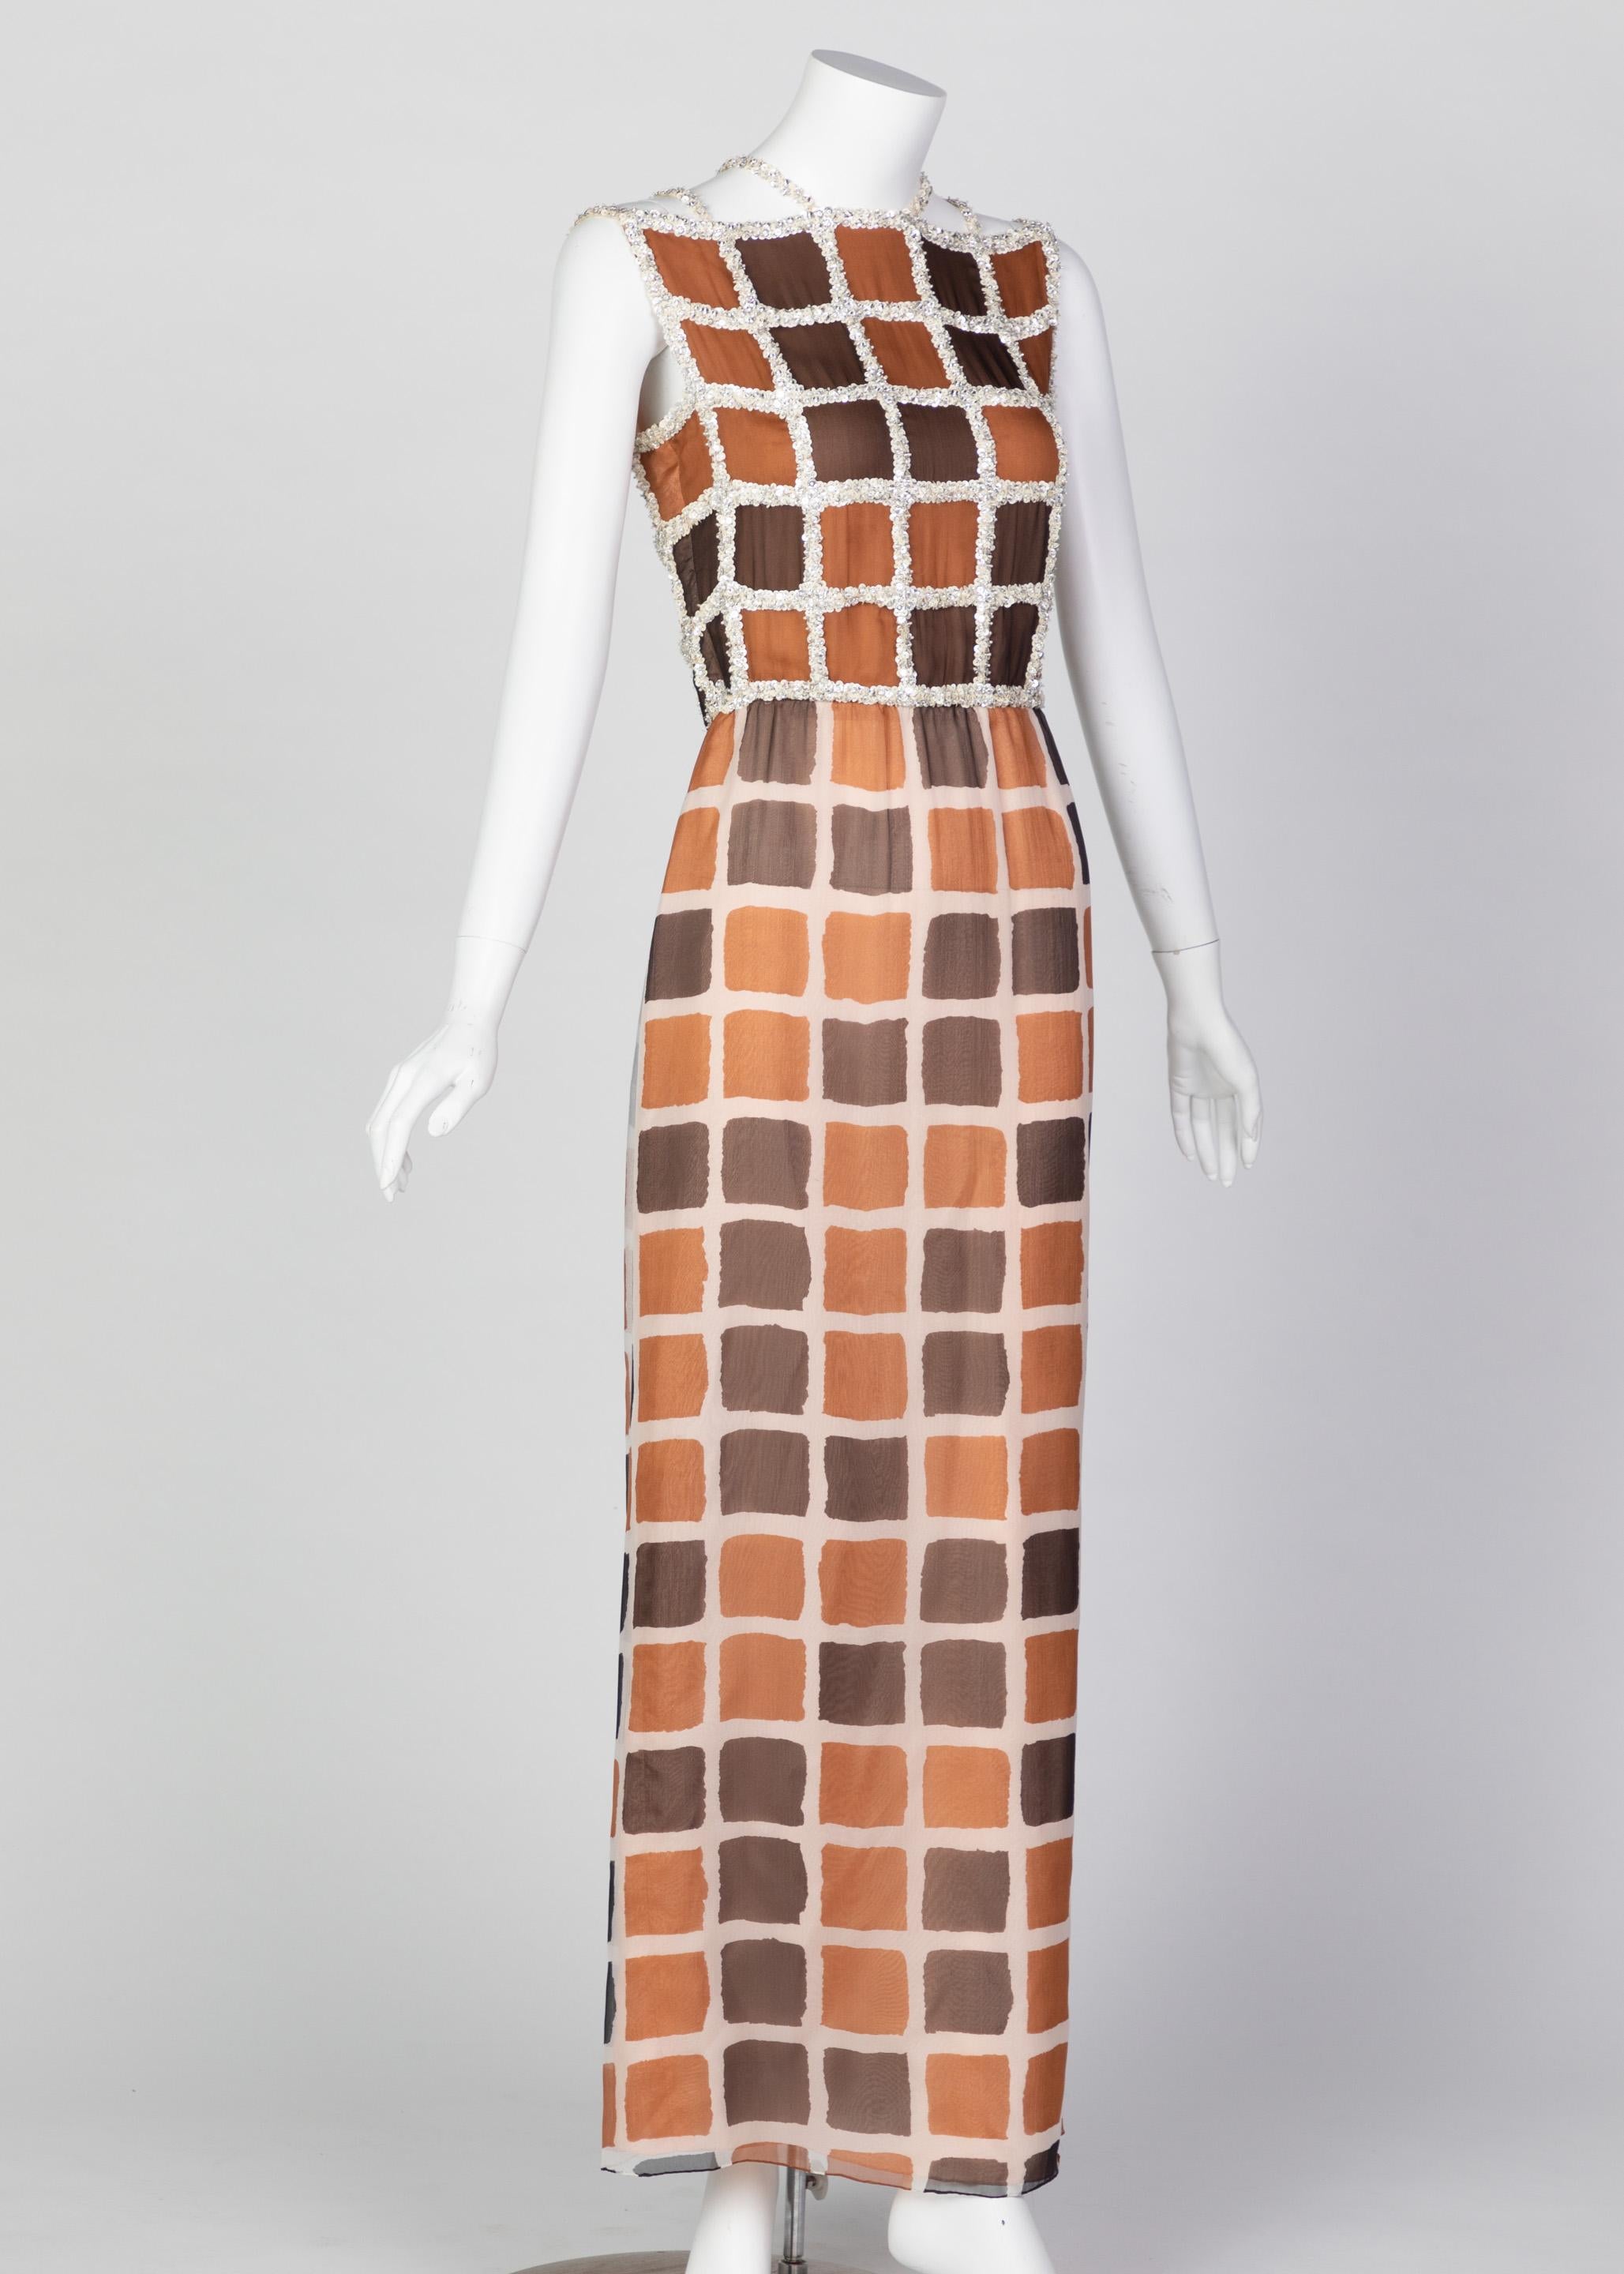 lattice dress